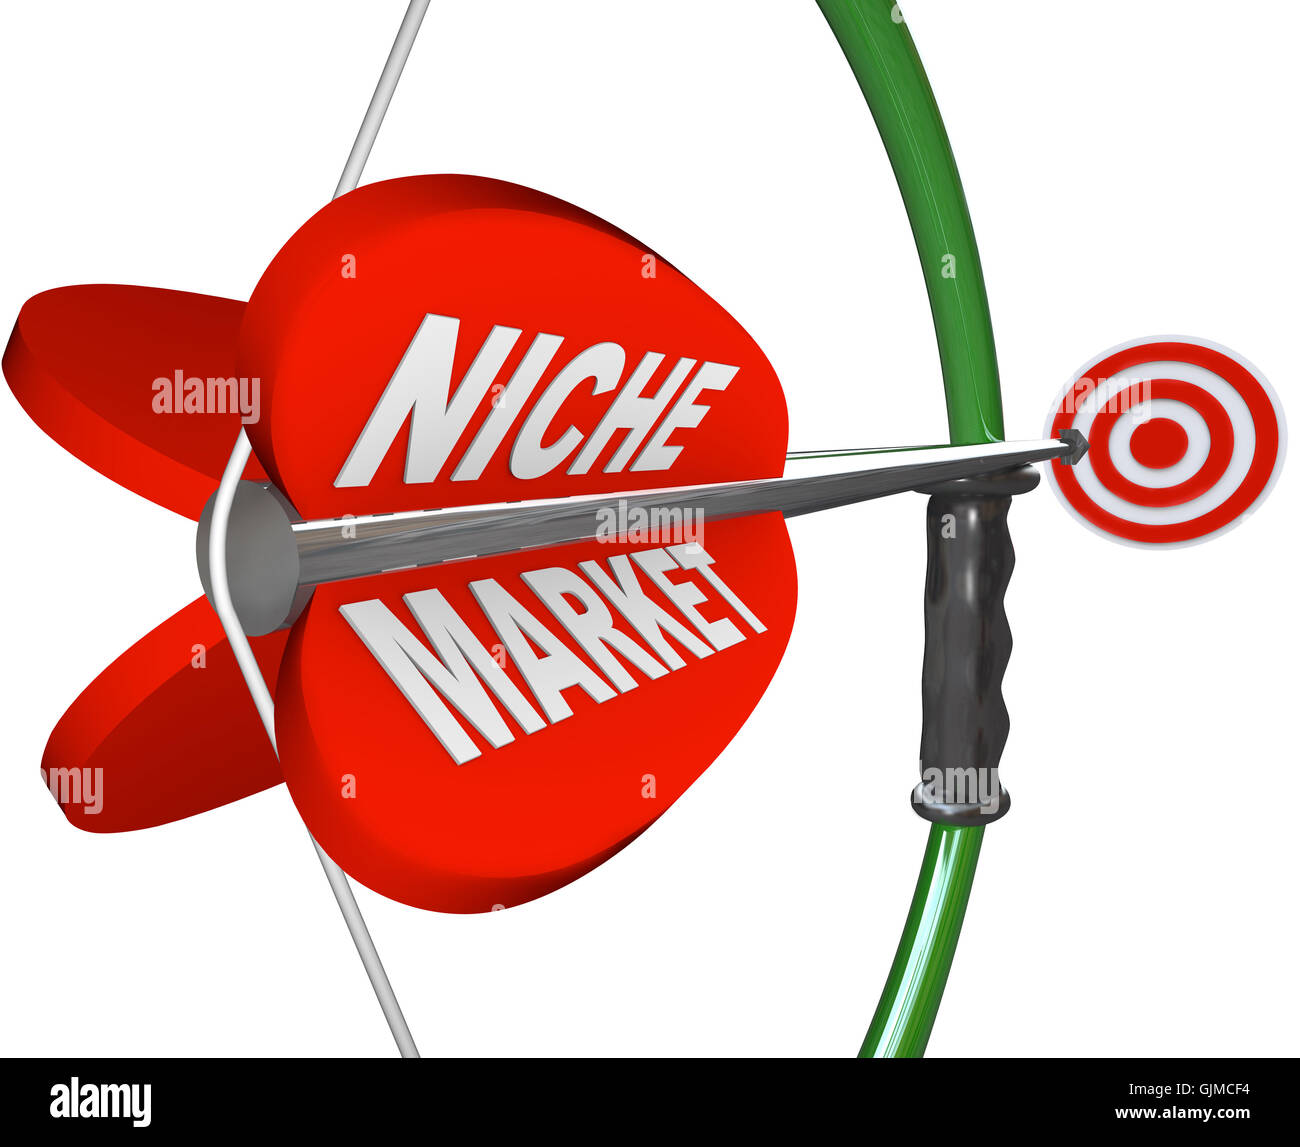 Niche Market - Bow and Arrow Aimed at Bulls Eye Stock Photo